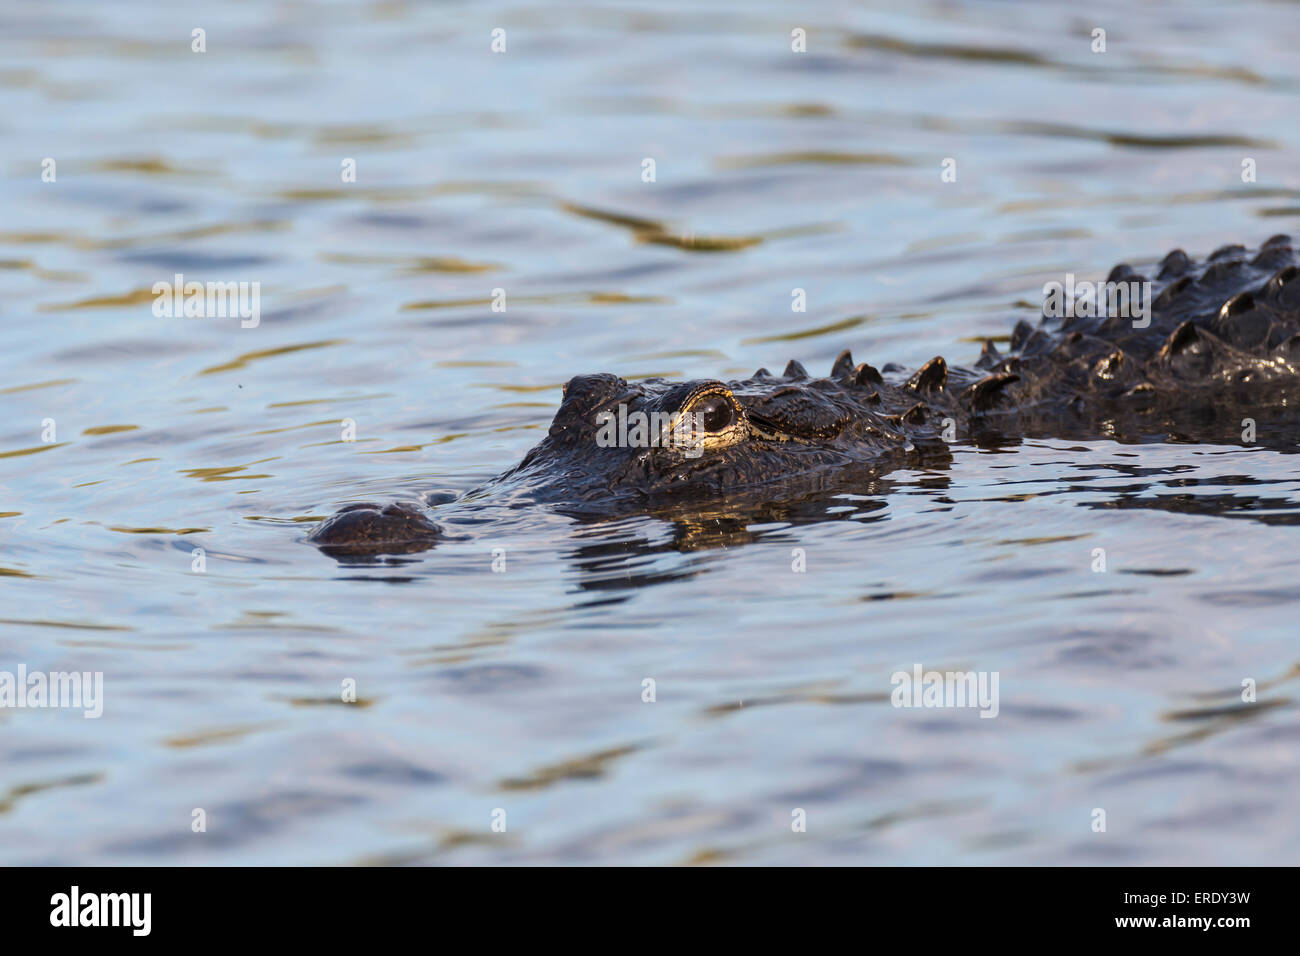 American Alligator (Alligator mississippiensis) swimming in water, Everglades National Park, Florida, USA Stock Photo